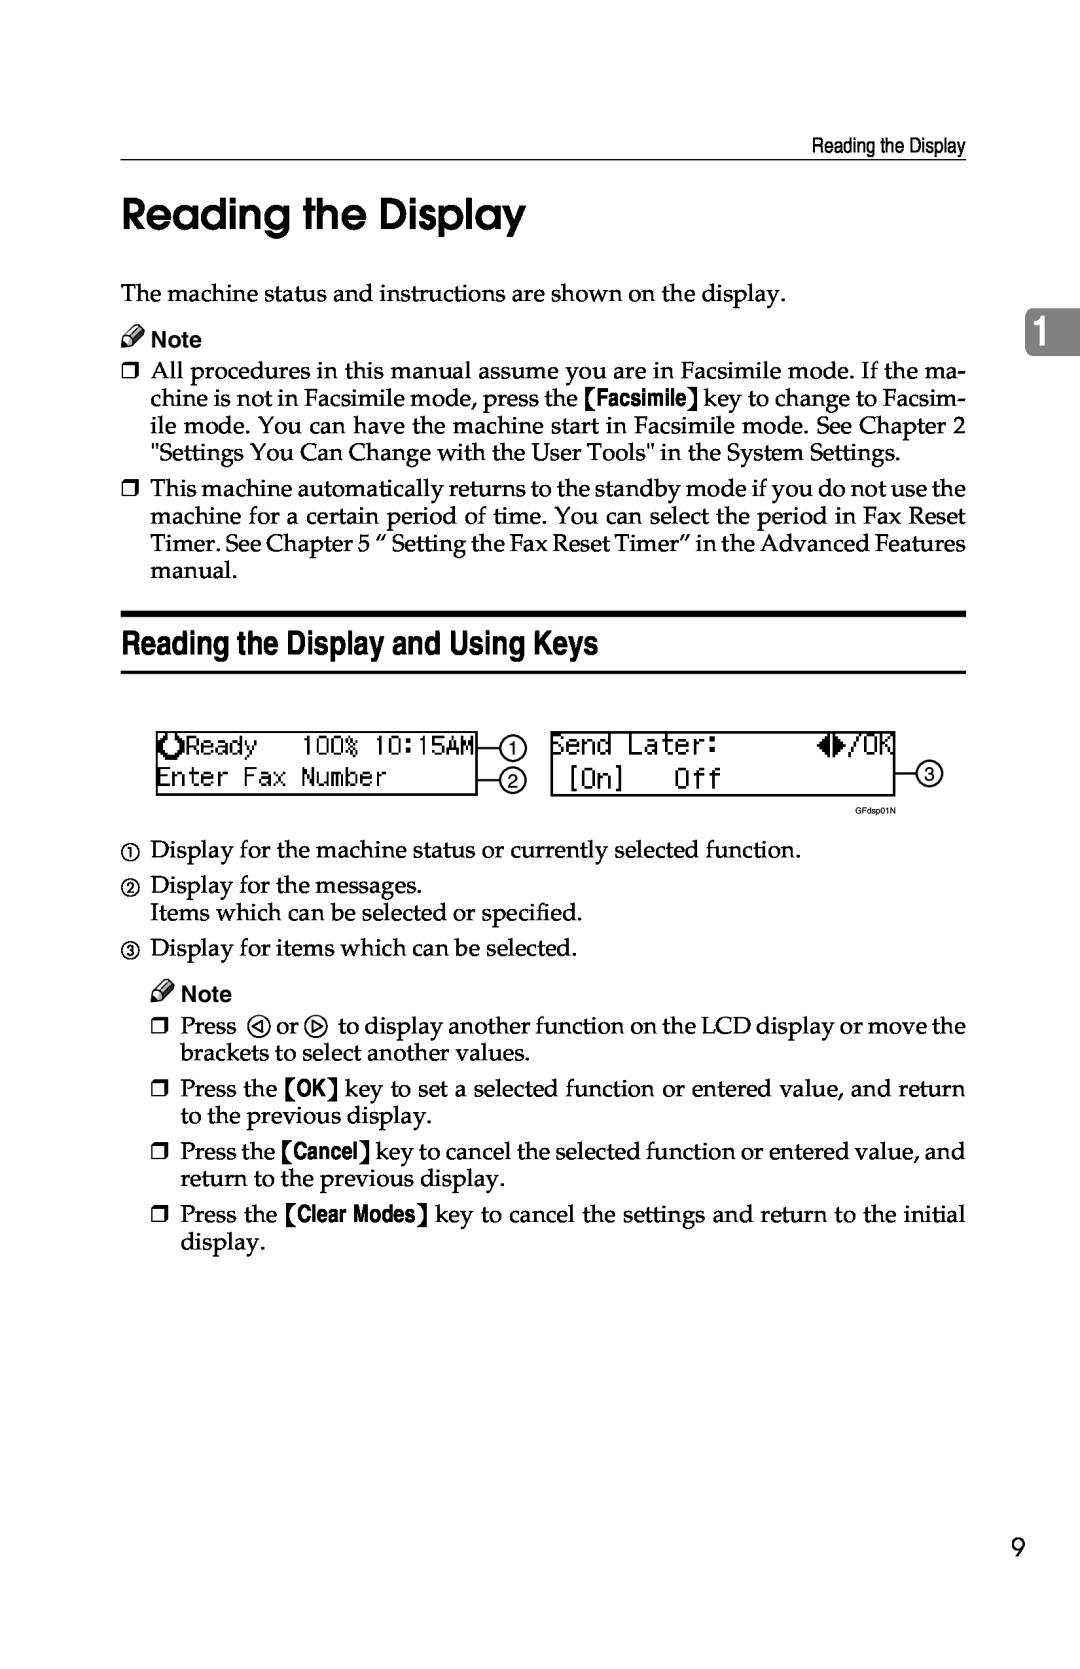 Savin G1619 manual Reading the Display and Using Keys 